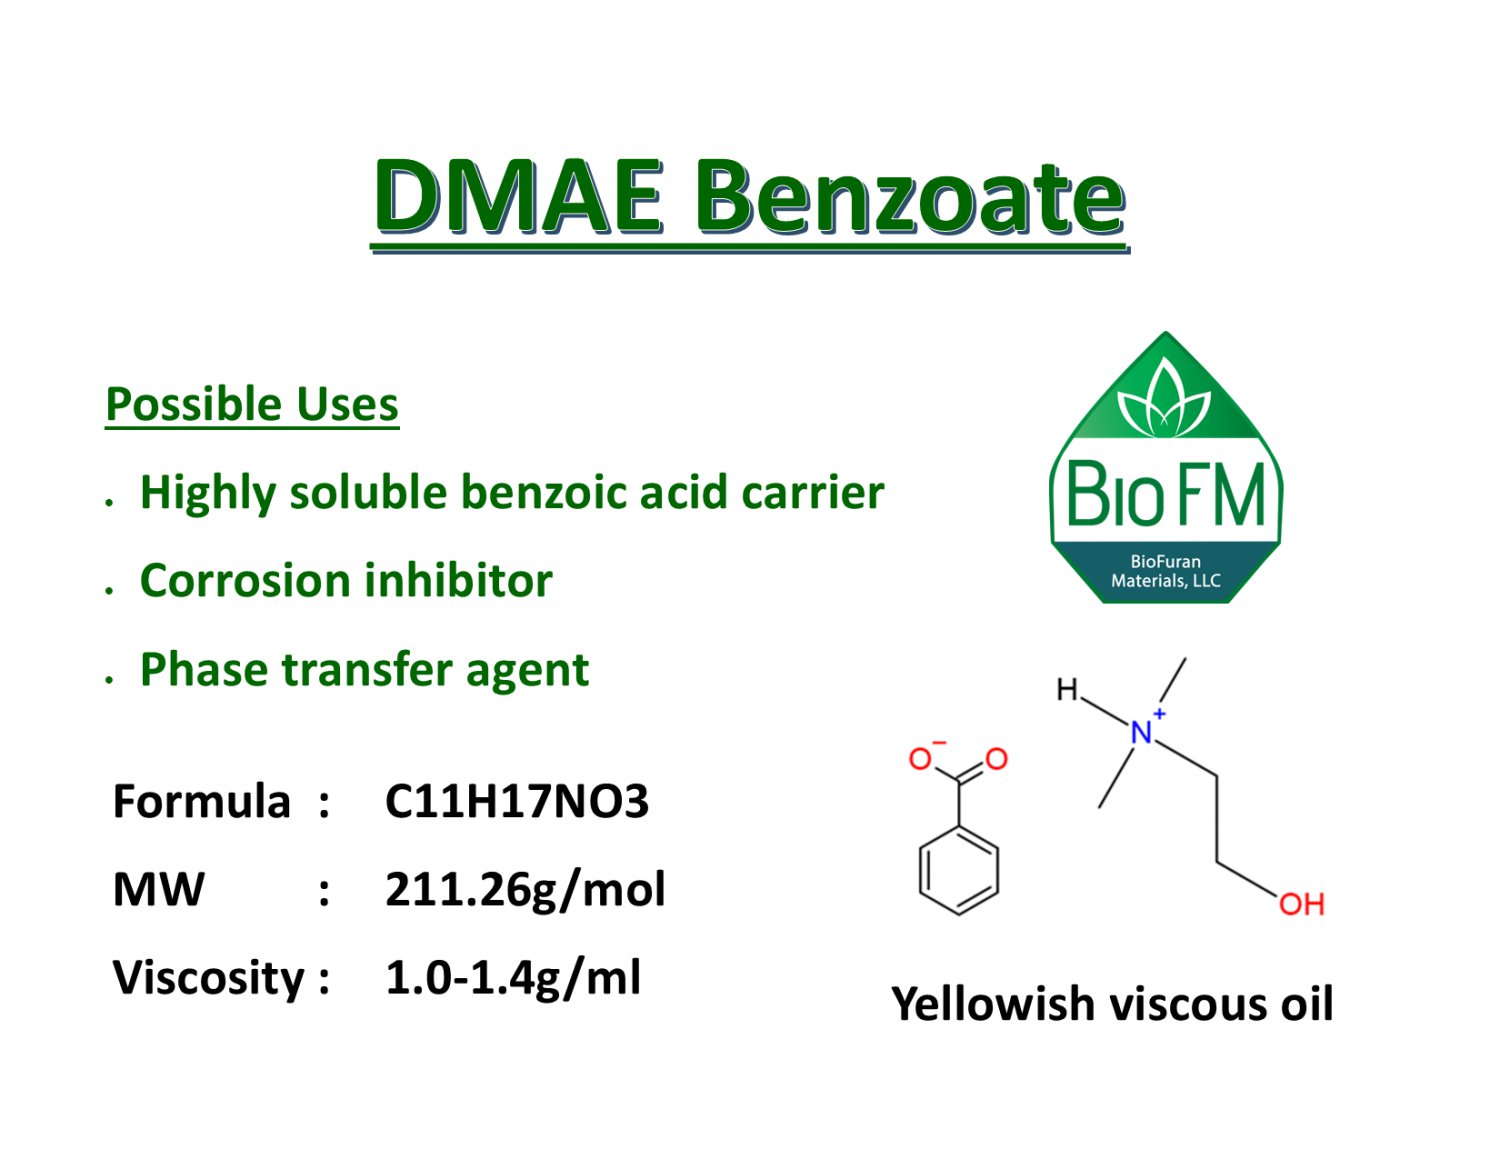 100g DMAE benzoate